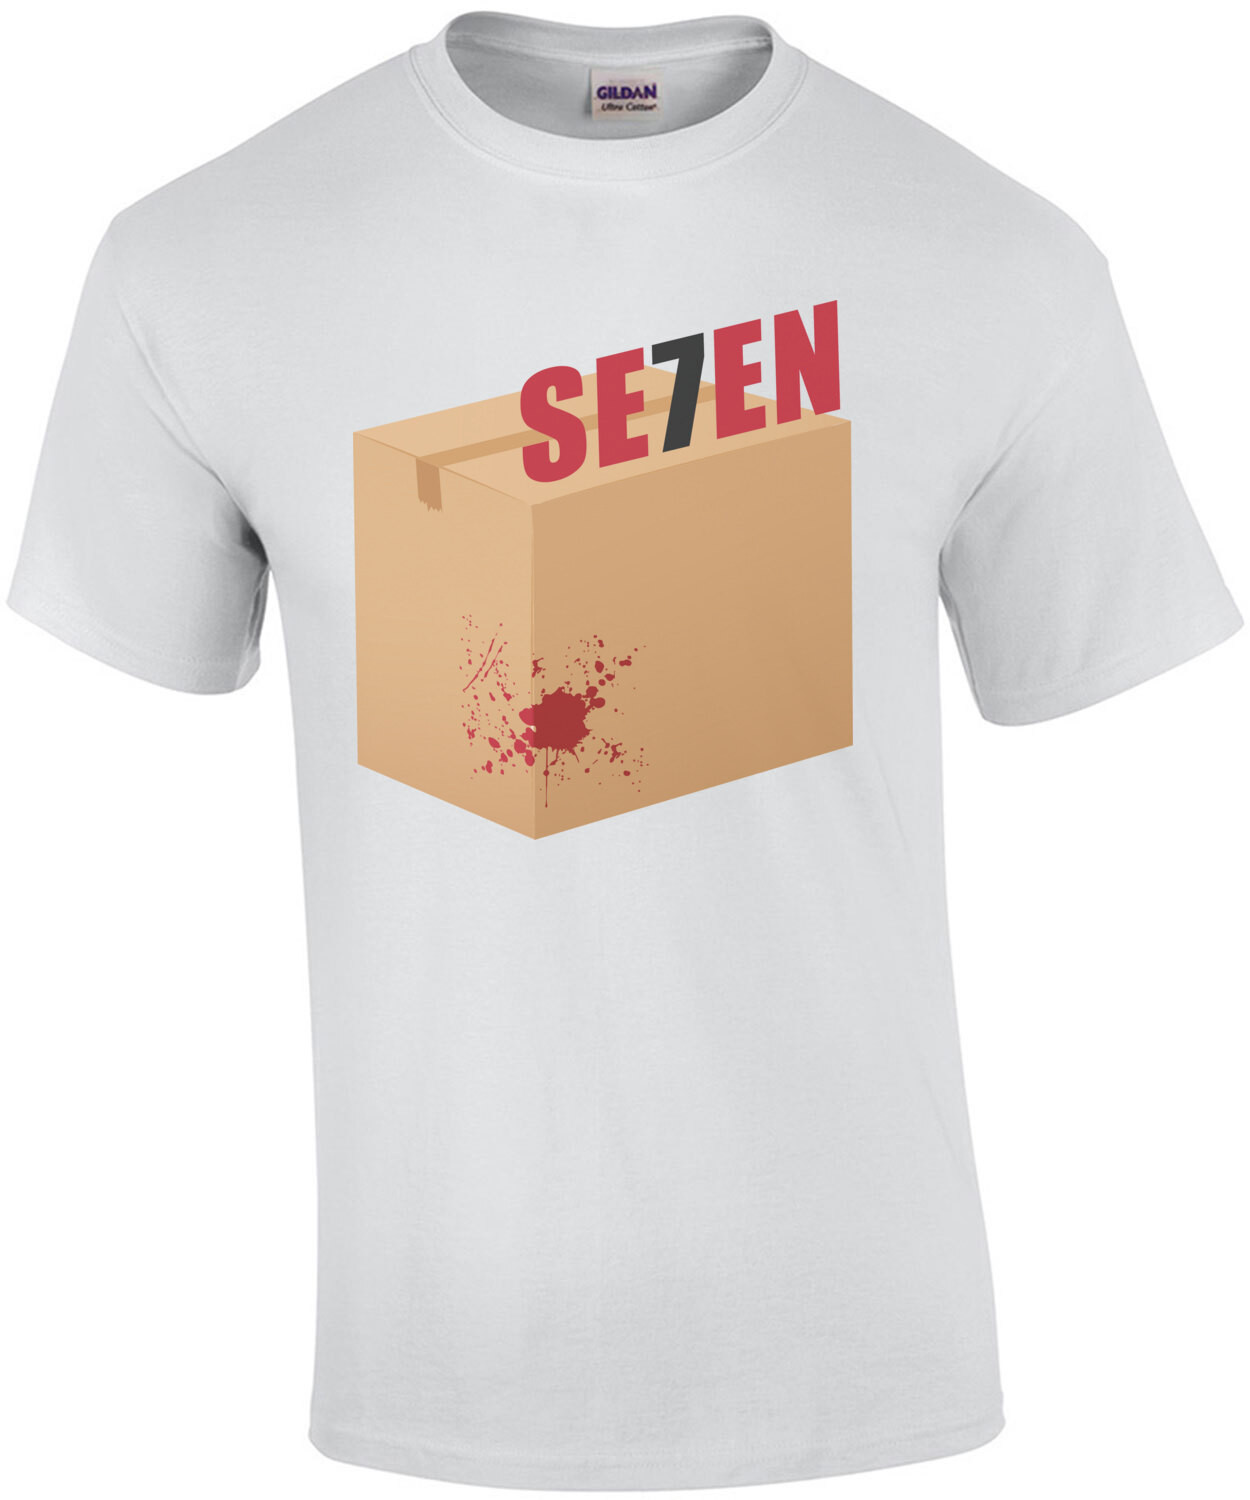 What's in the box - Se7en T-Shirt - 90's T-Shirt